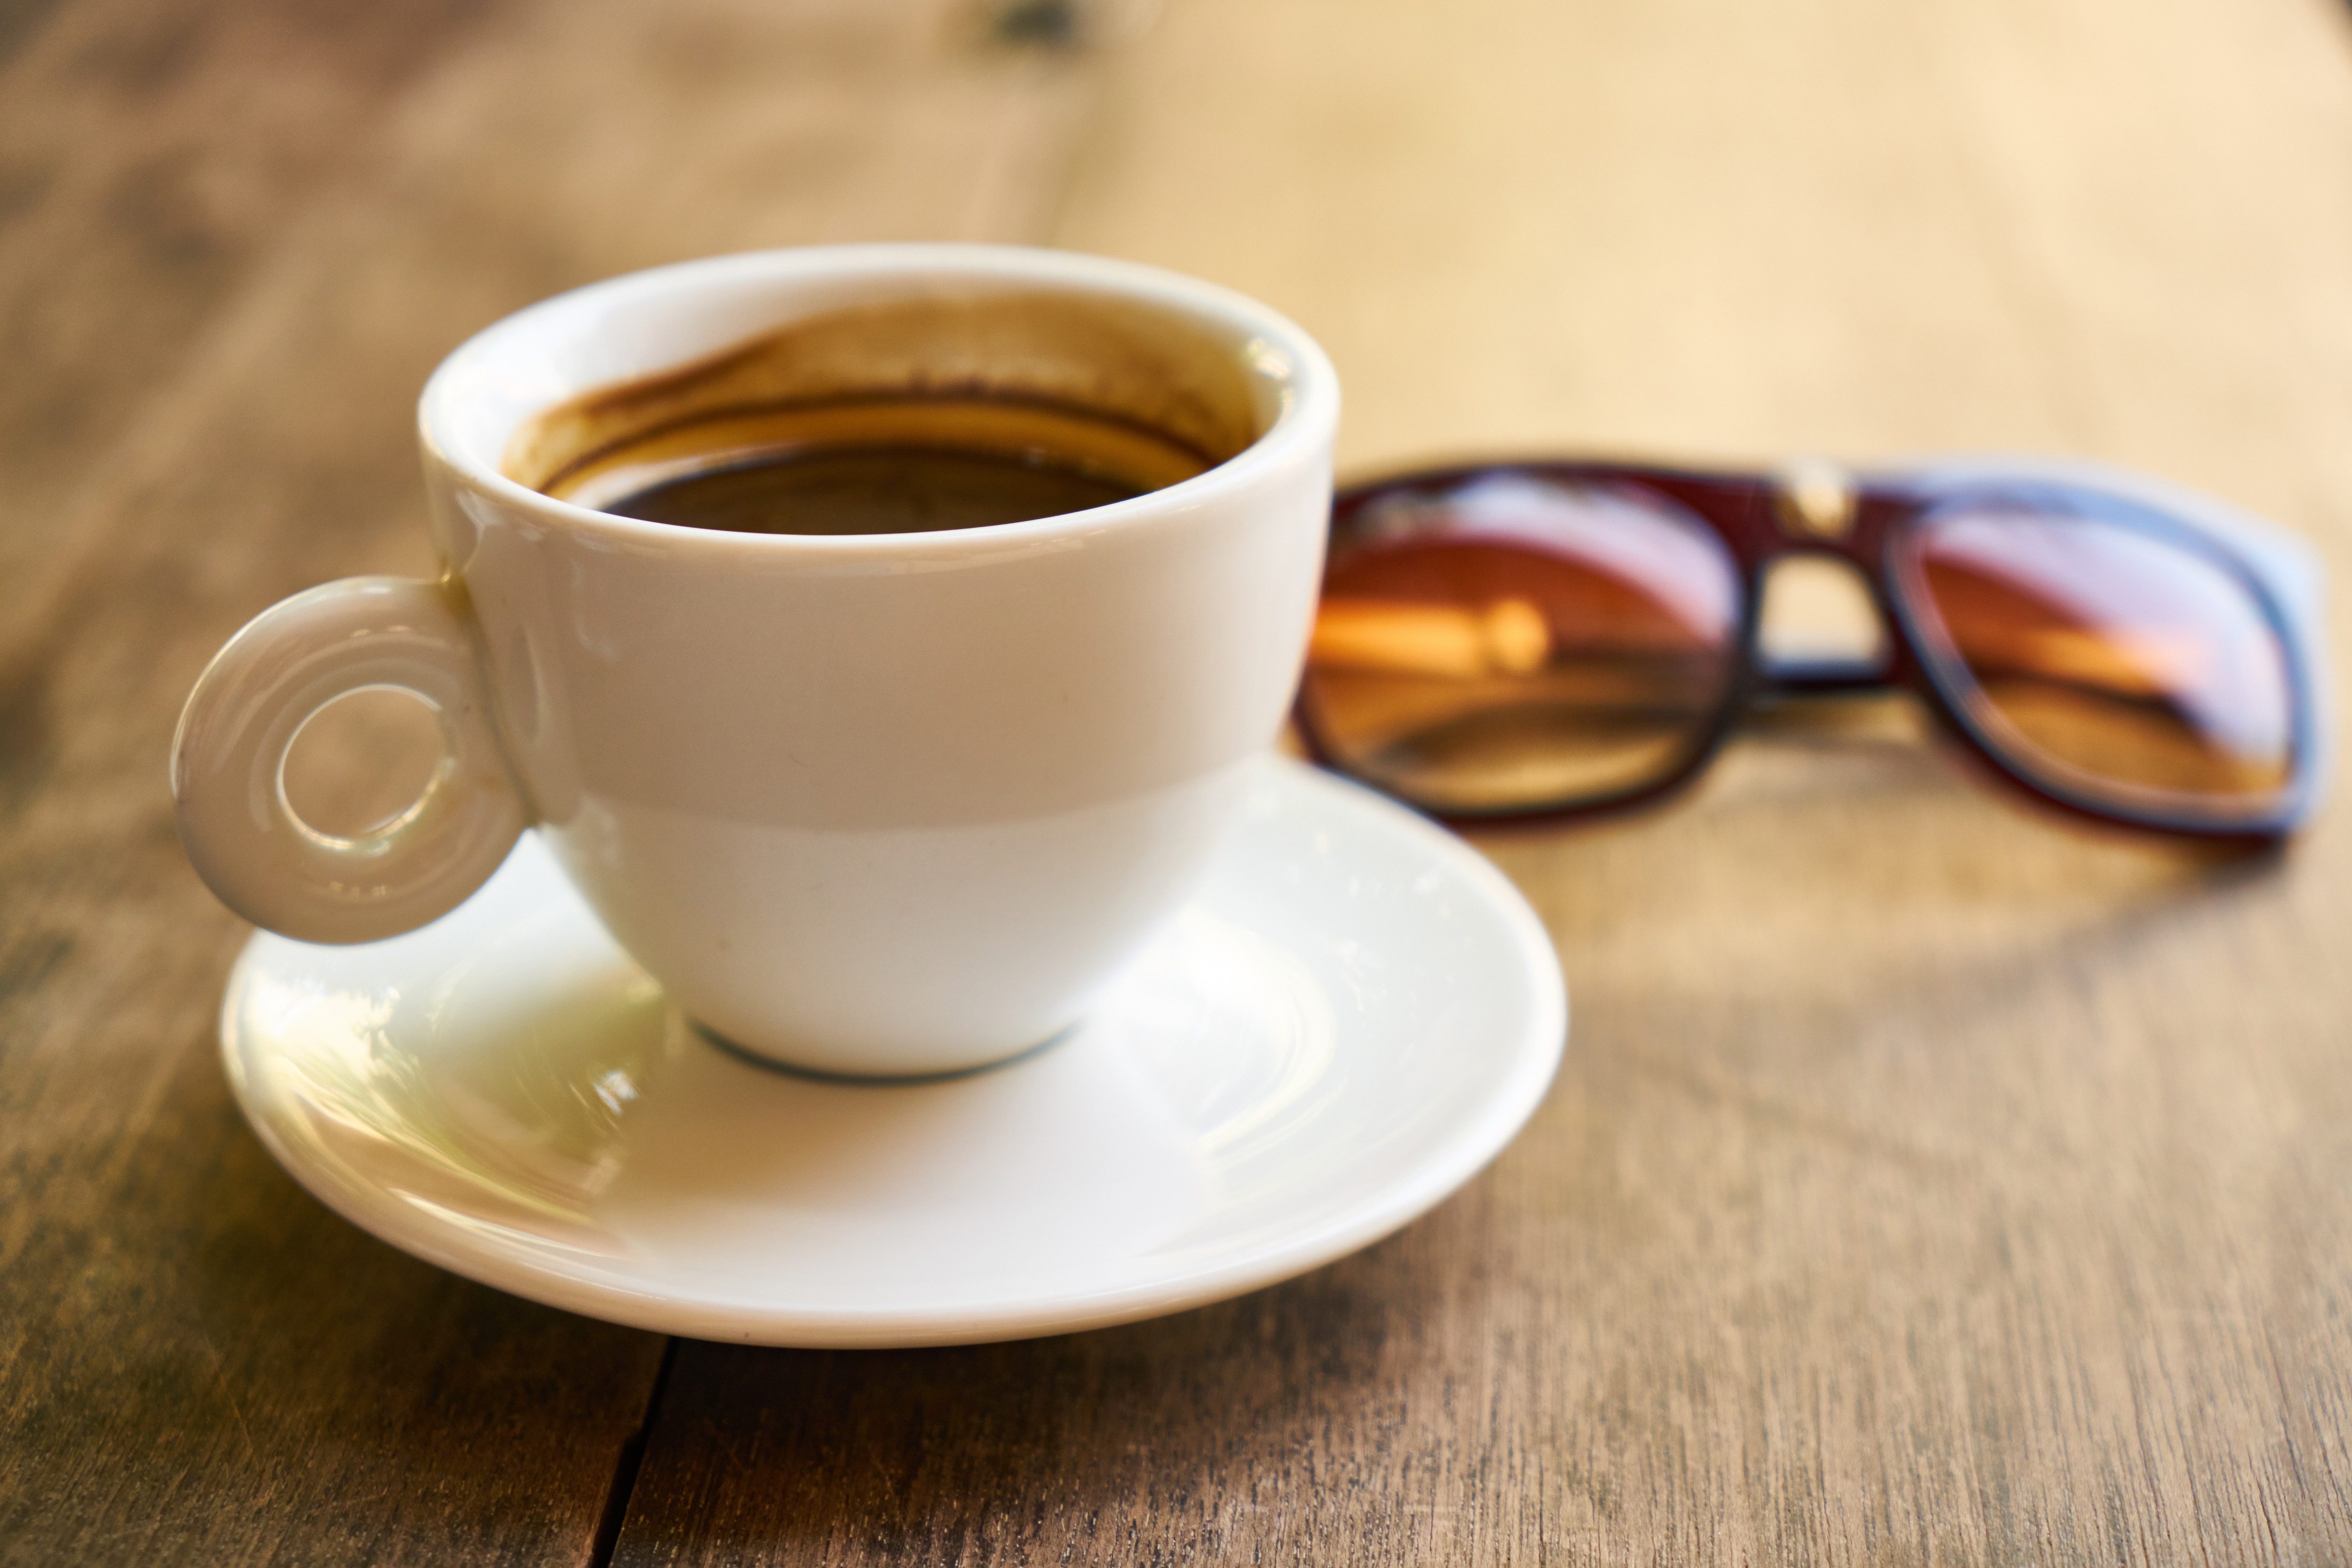 COFFEE RUN Oversized Black Sunglasses | Quay Australia